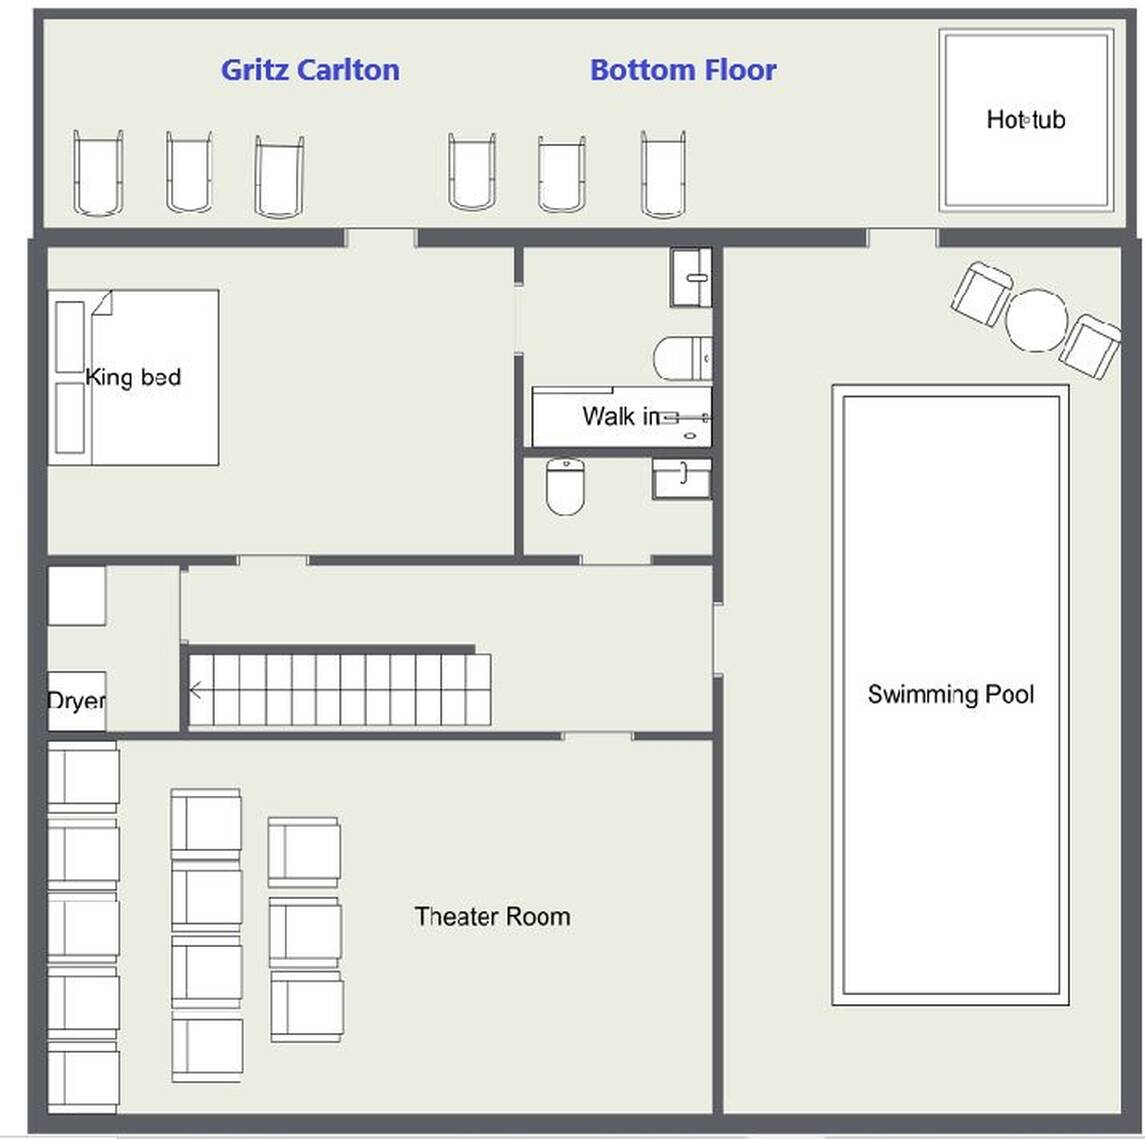 Gritz Carlton Lodge floorplan